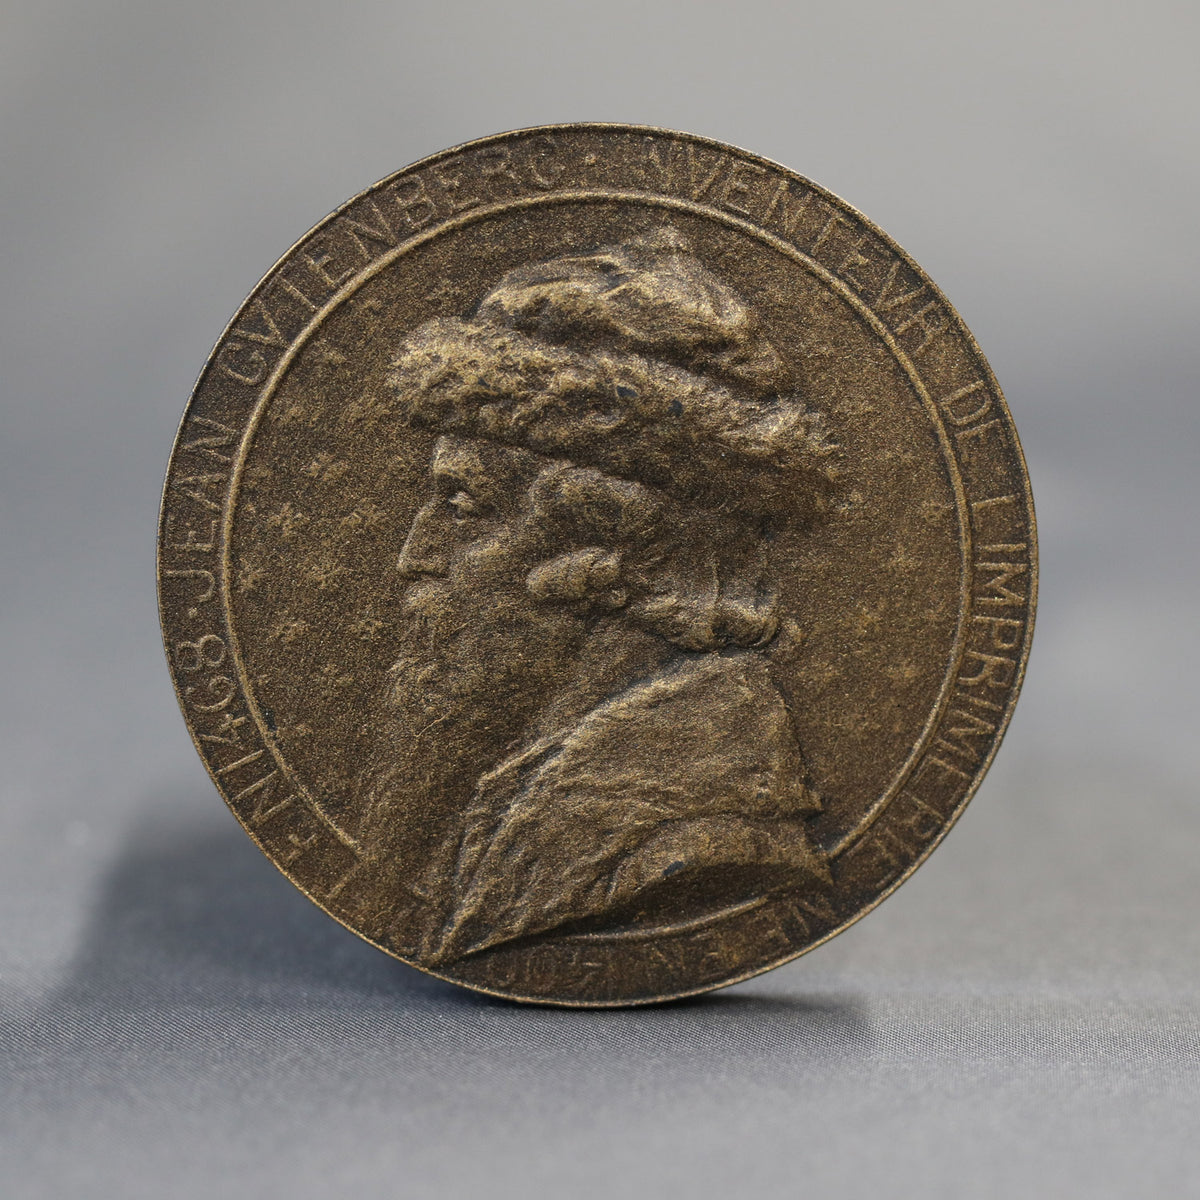 Johannes Gutenberg Commemorative Coin